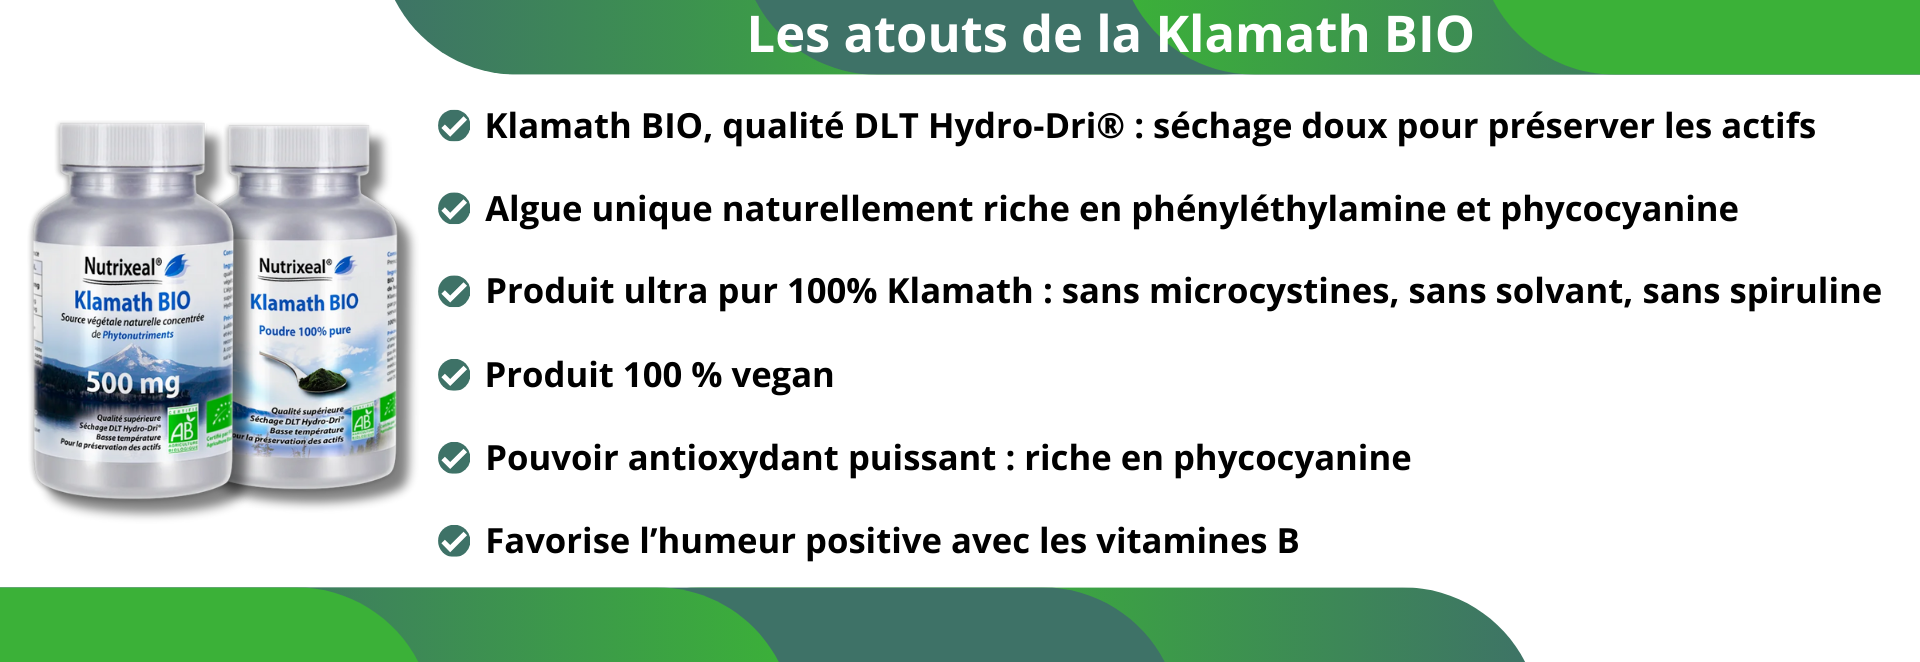 Atouts de notre Klamath BIO : AFA klamath, DLT Hydro-Dri®